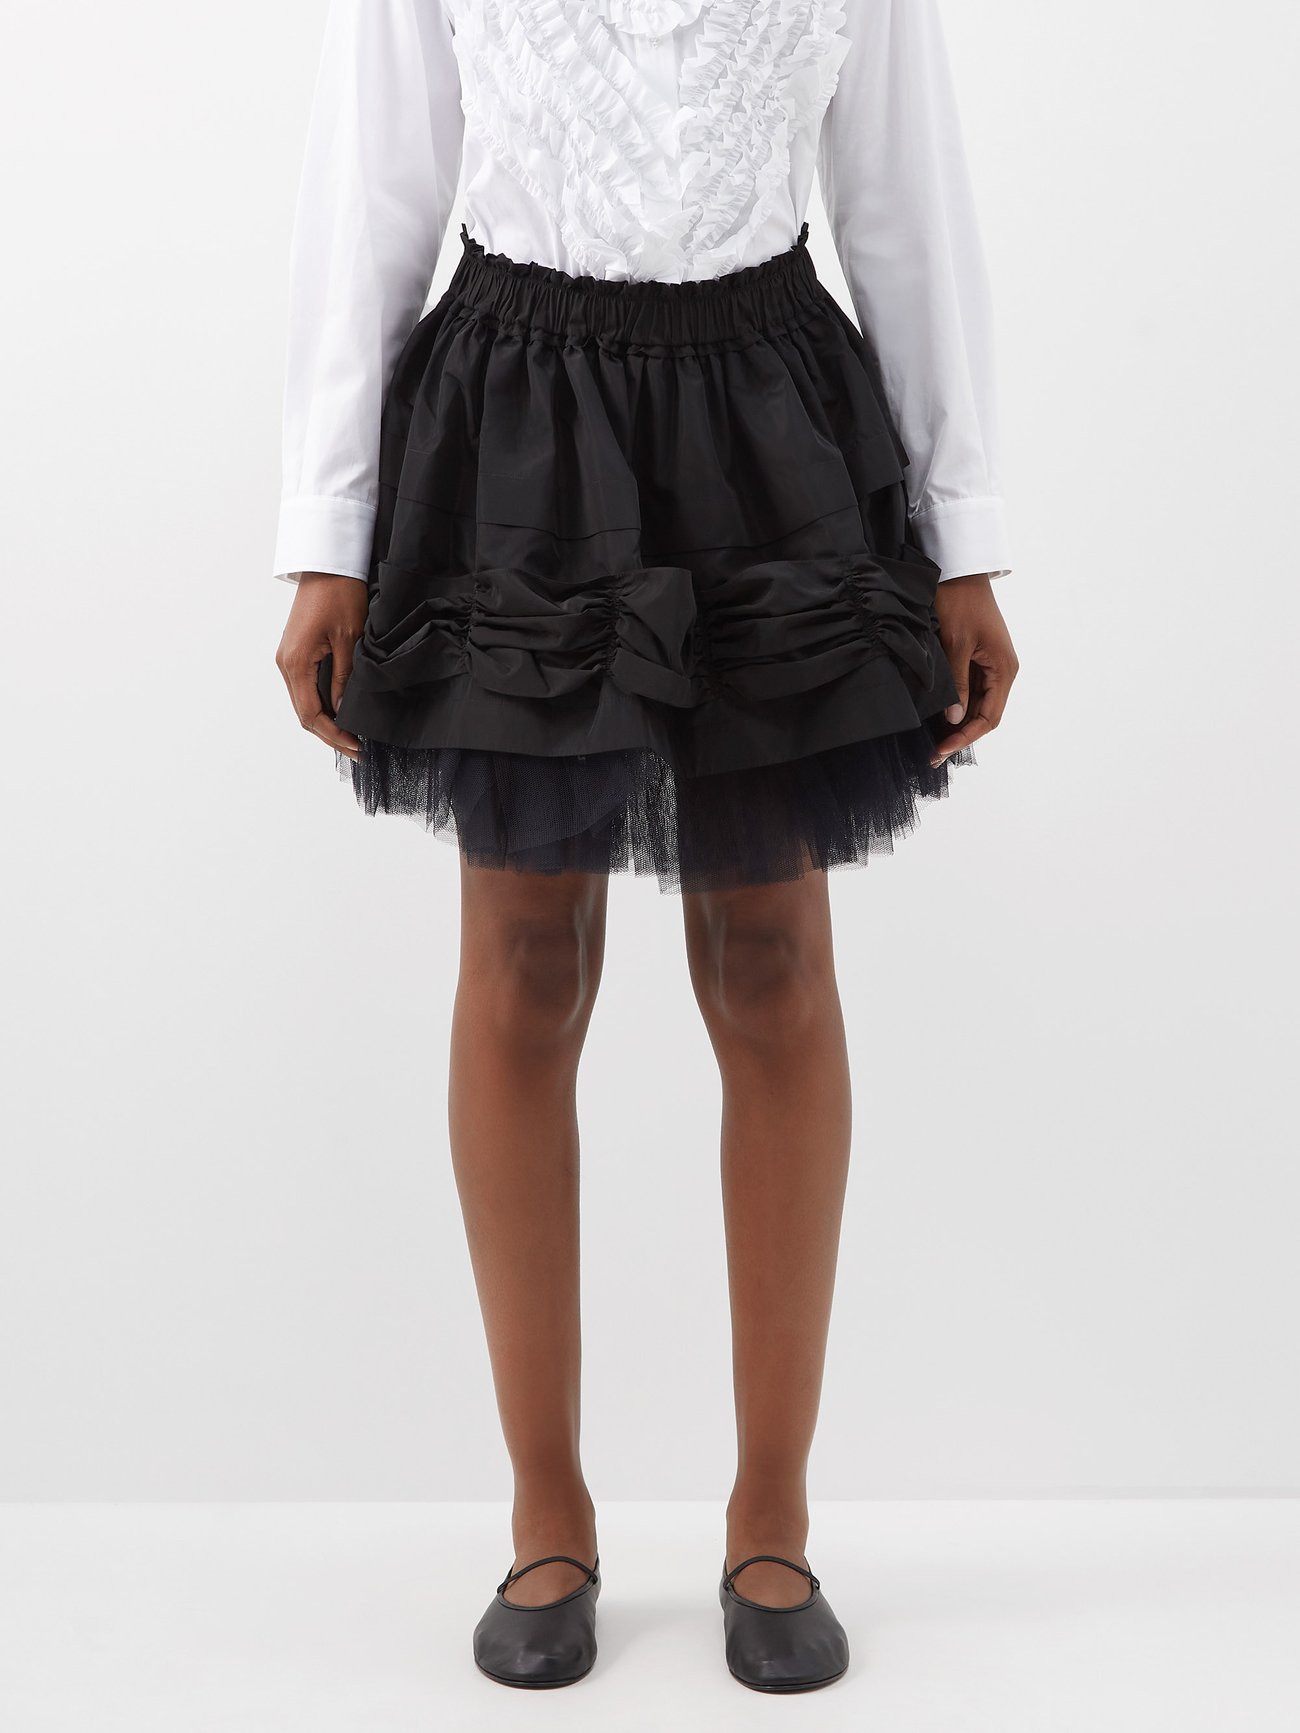 matchesfashion.com | Ruched taffeta and tulle mini skirt